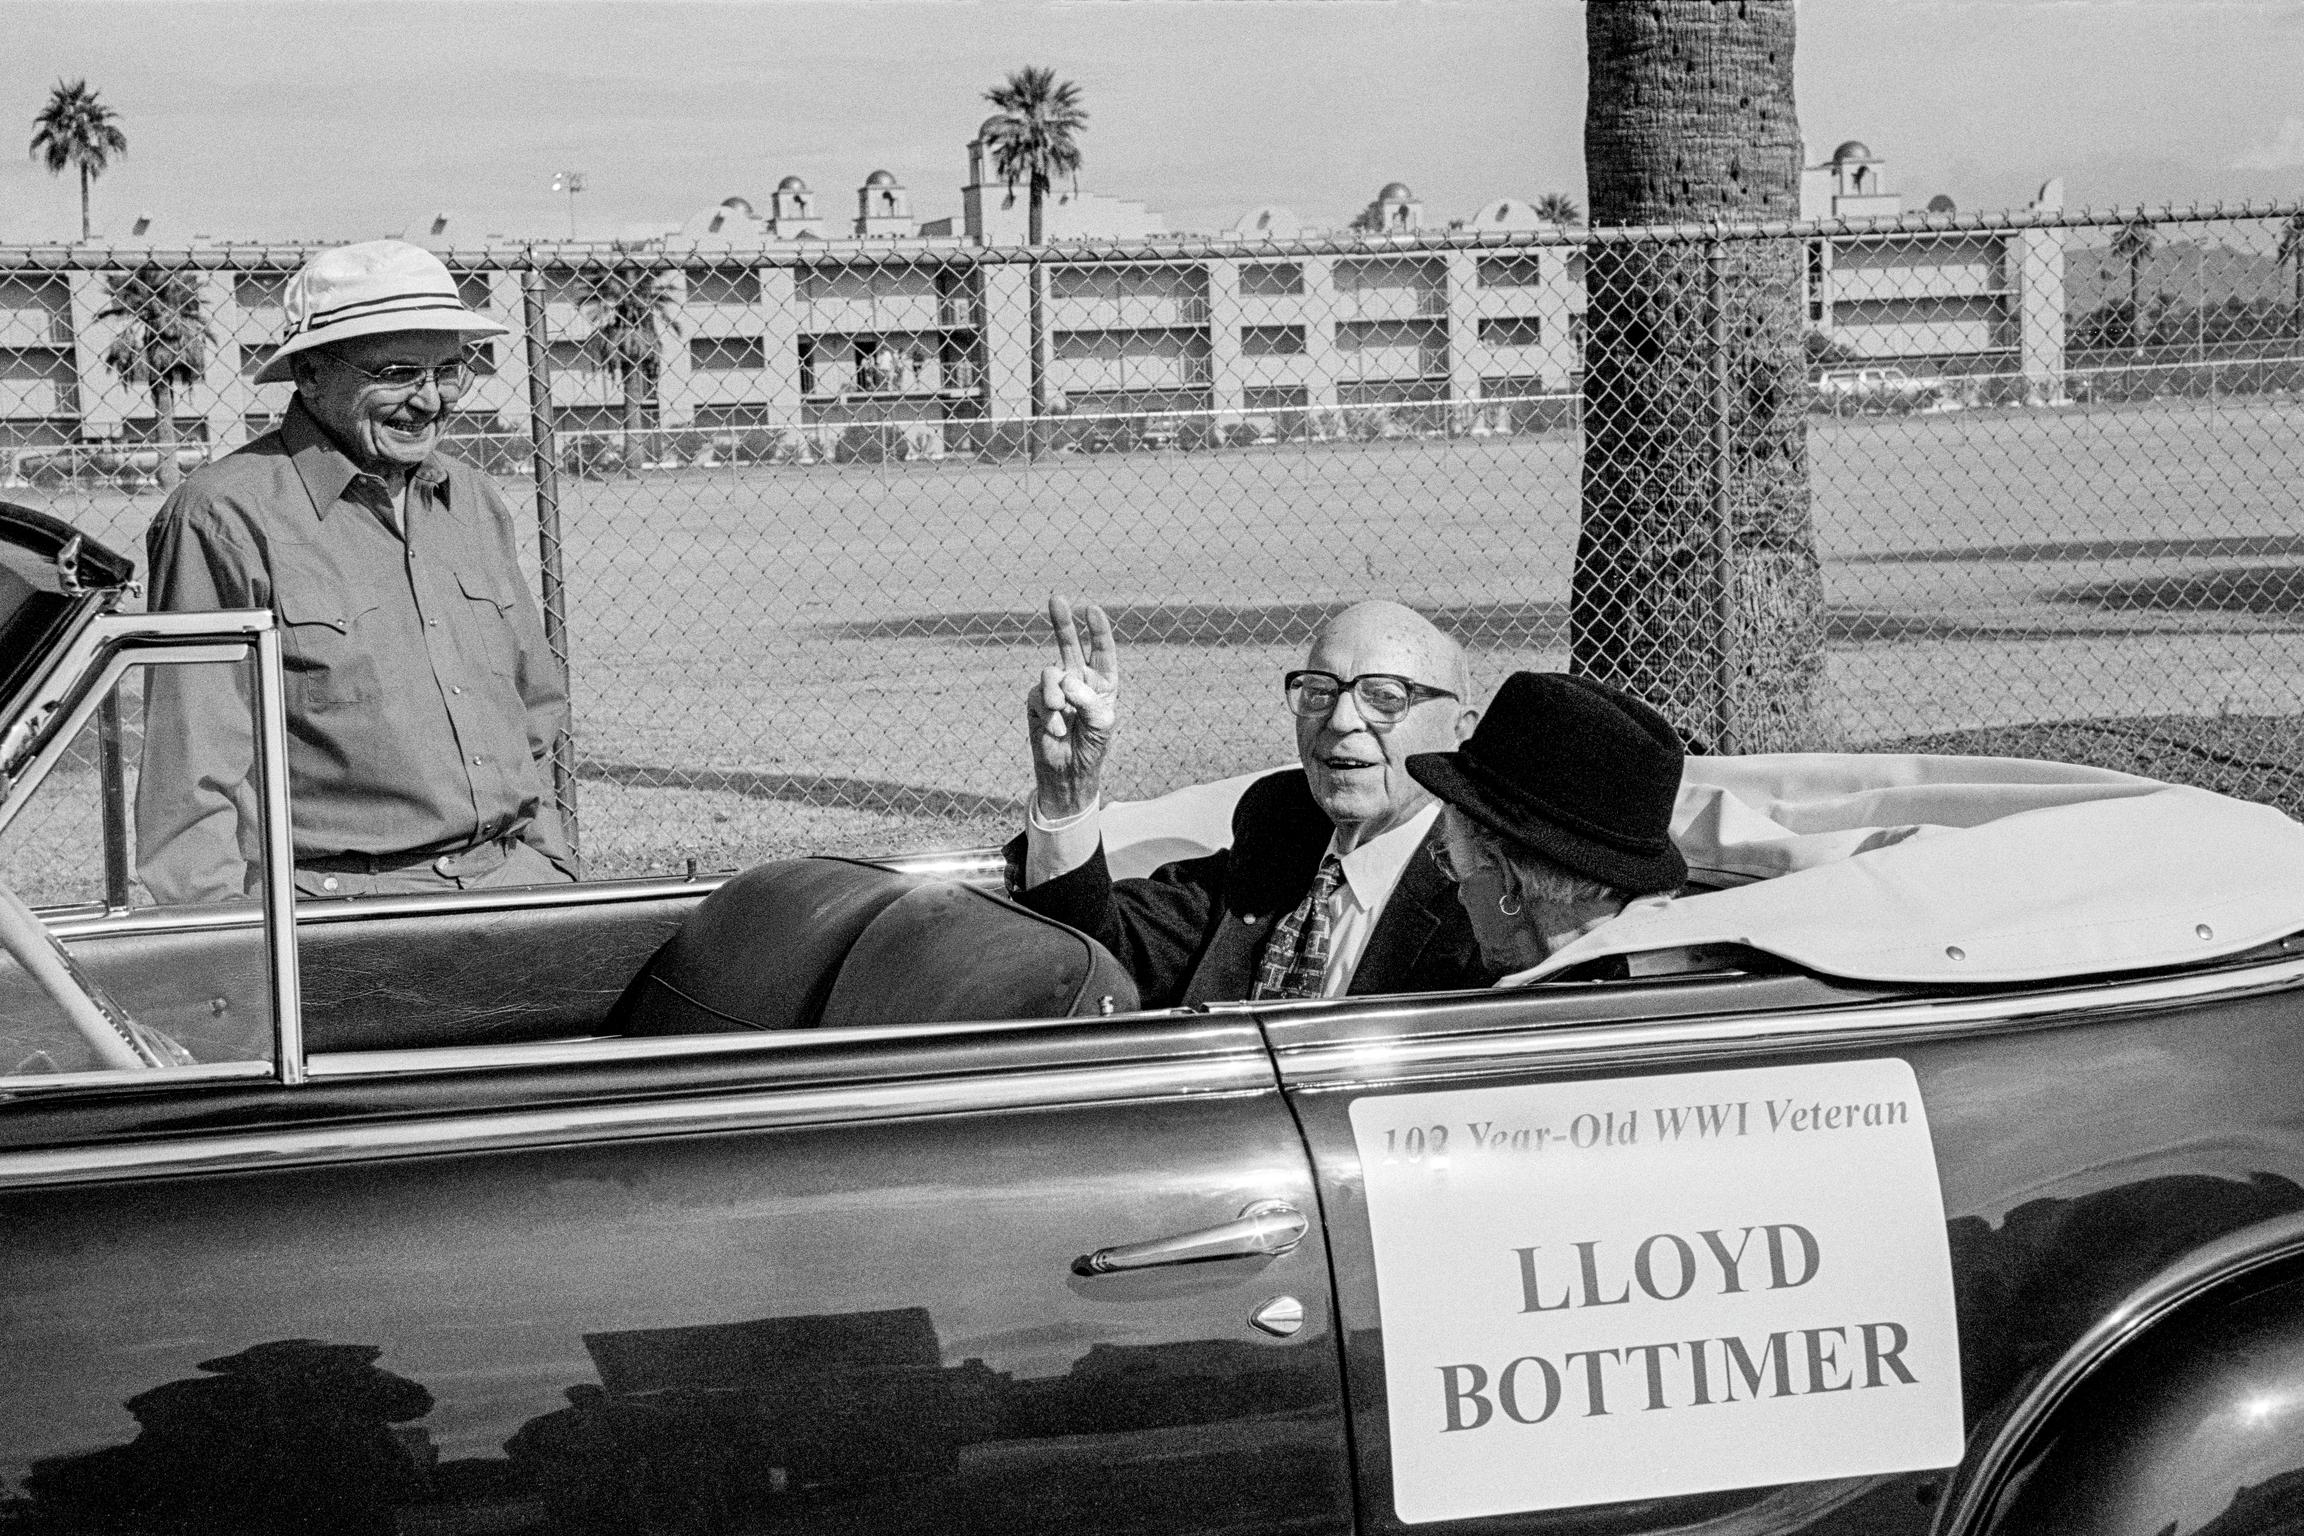 Veterans Day Parade. A celebration to honour the nation's veterans. Lloyd Bottimer aged 102. Phoenix, Arizona USA